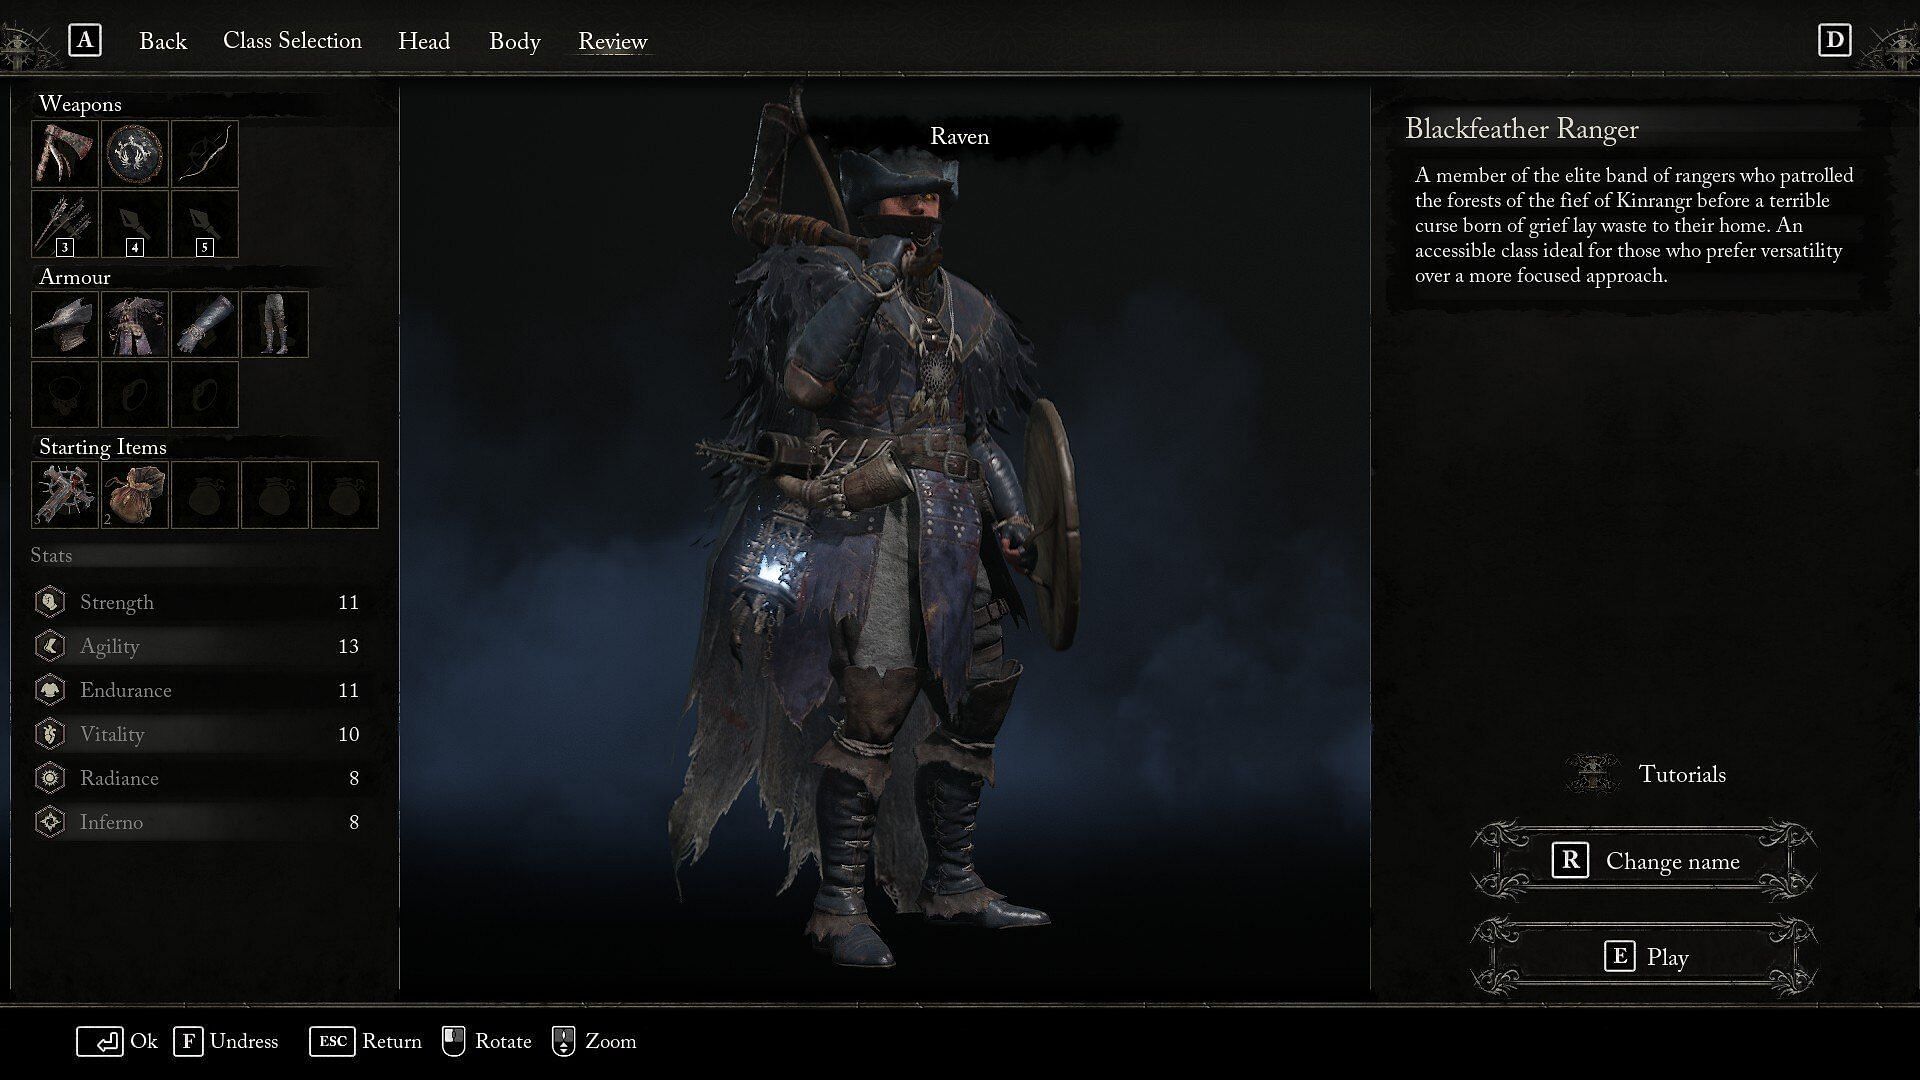 The Blackfeather Ranger (Image via CI Games)